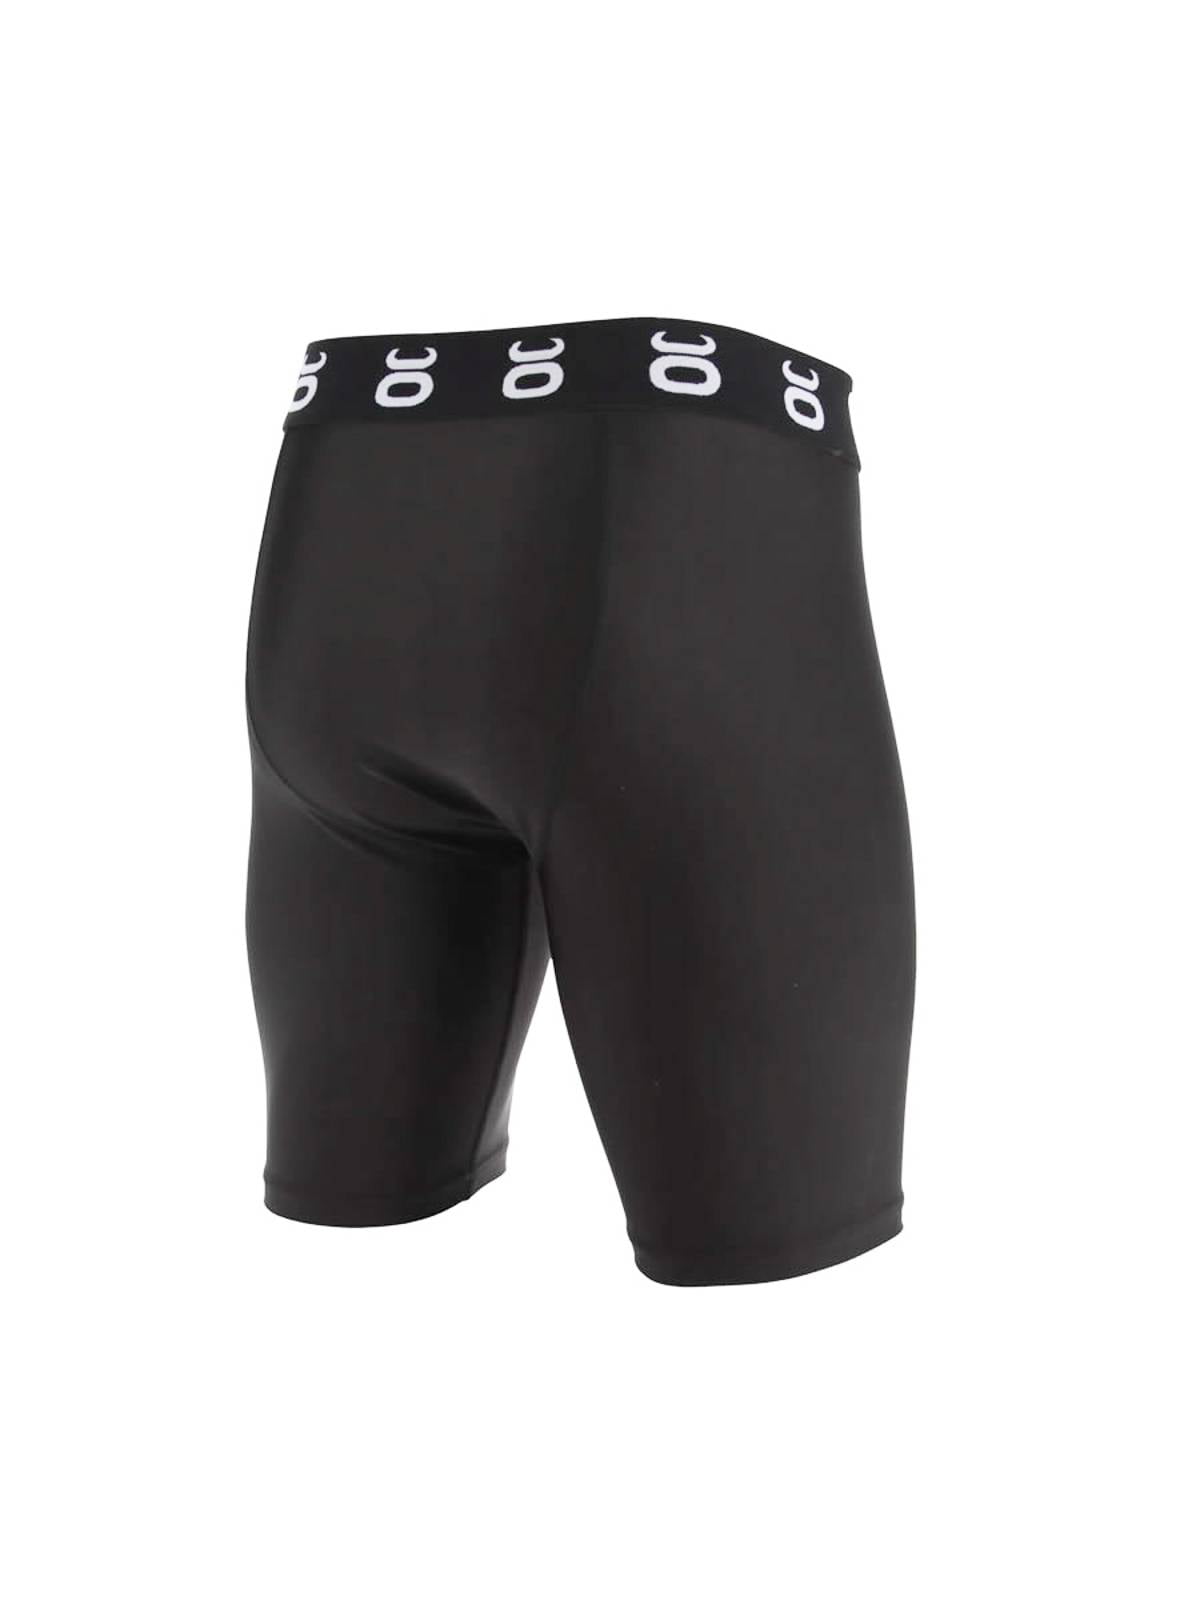 Jaco Mens Leverage Compression Shorts Black/White 